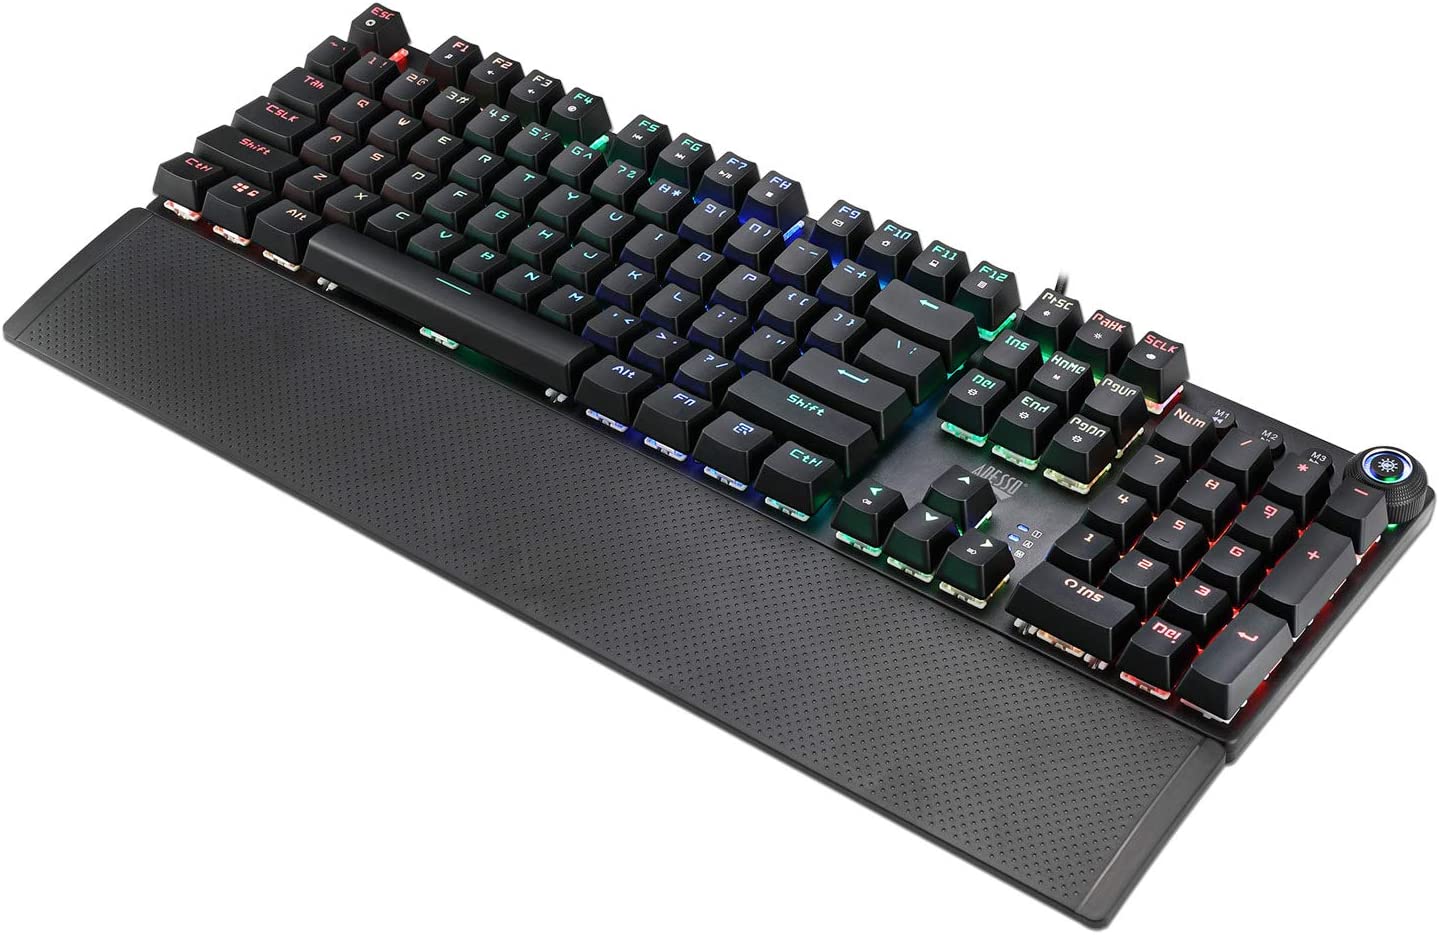 Adesso AKB-650EB Programmable Mechanical Gaming Keyboard